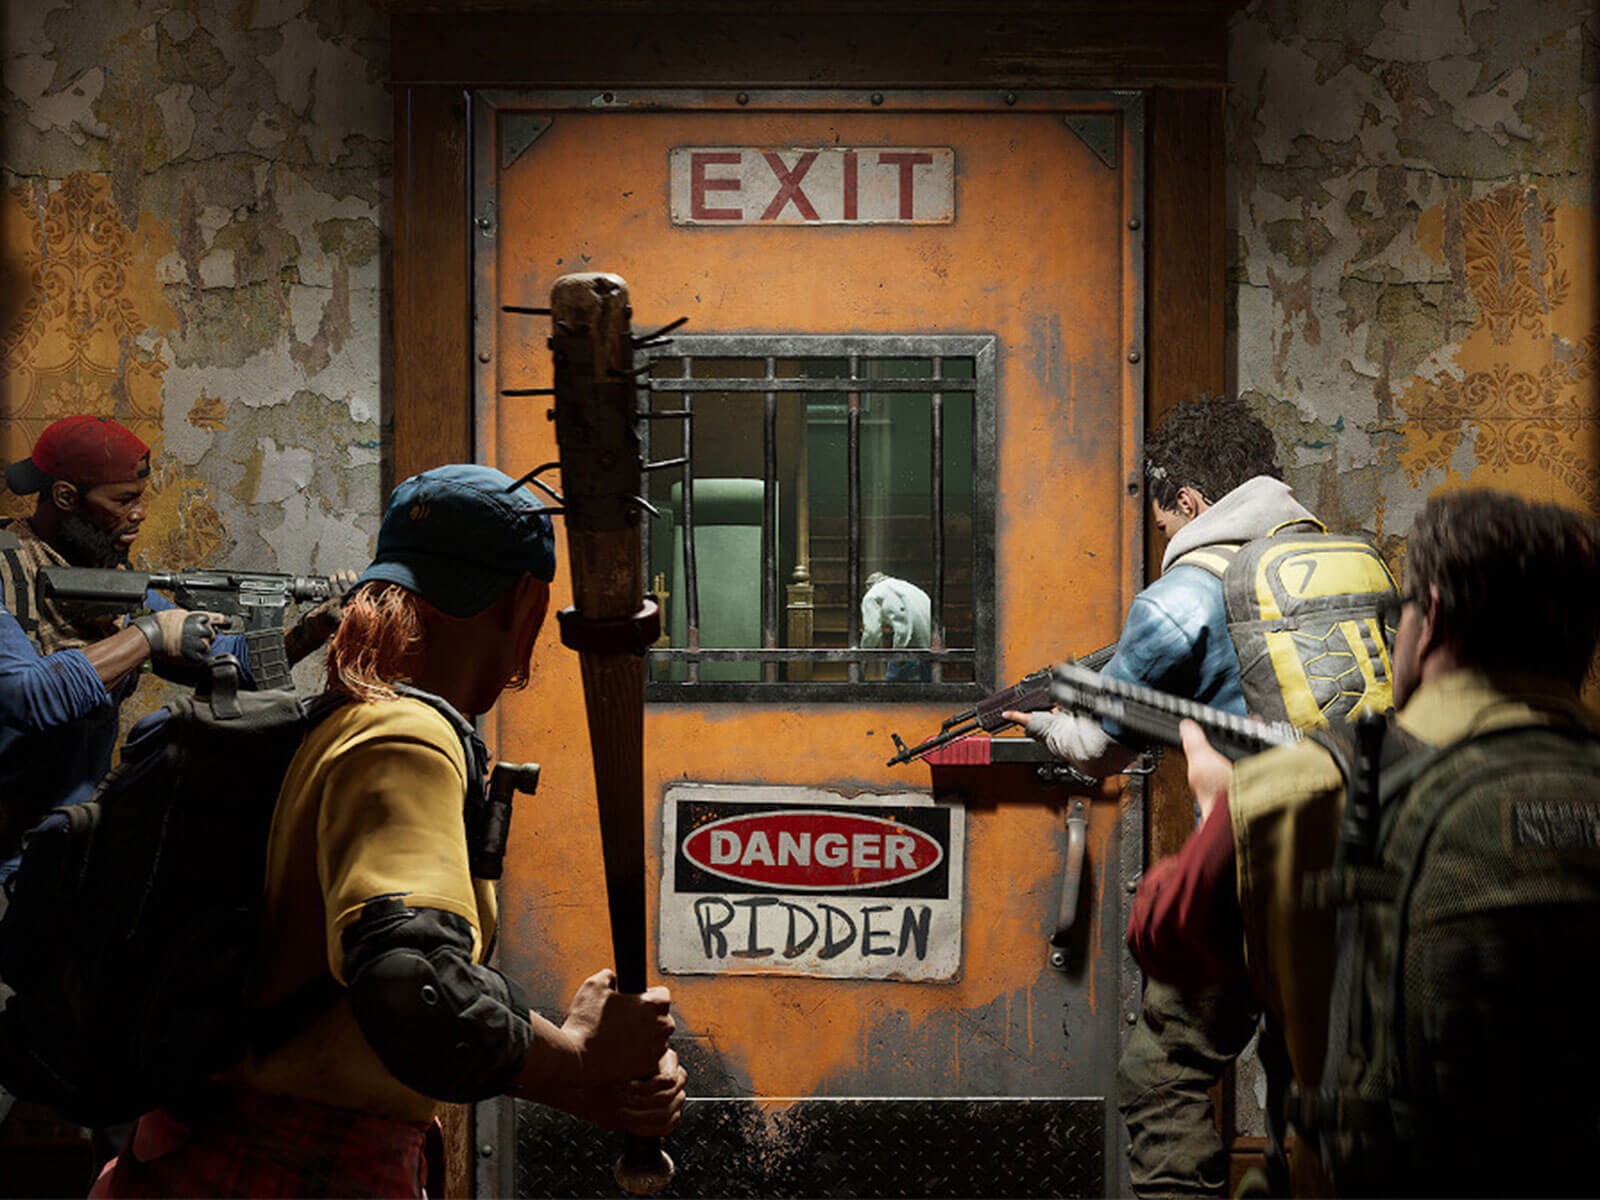 Four armed survivors approach an exit door.